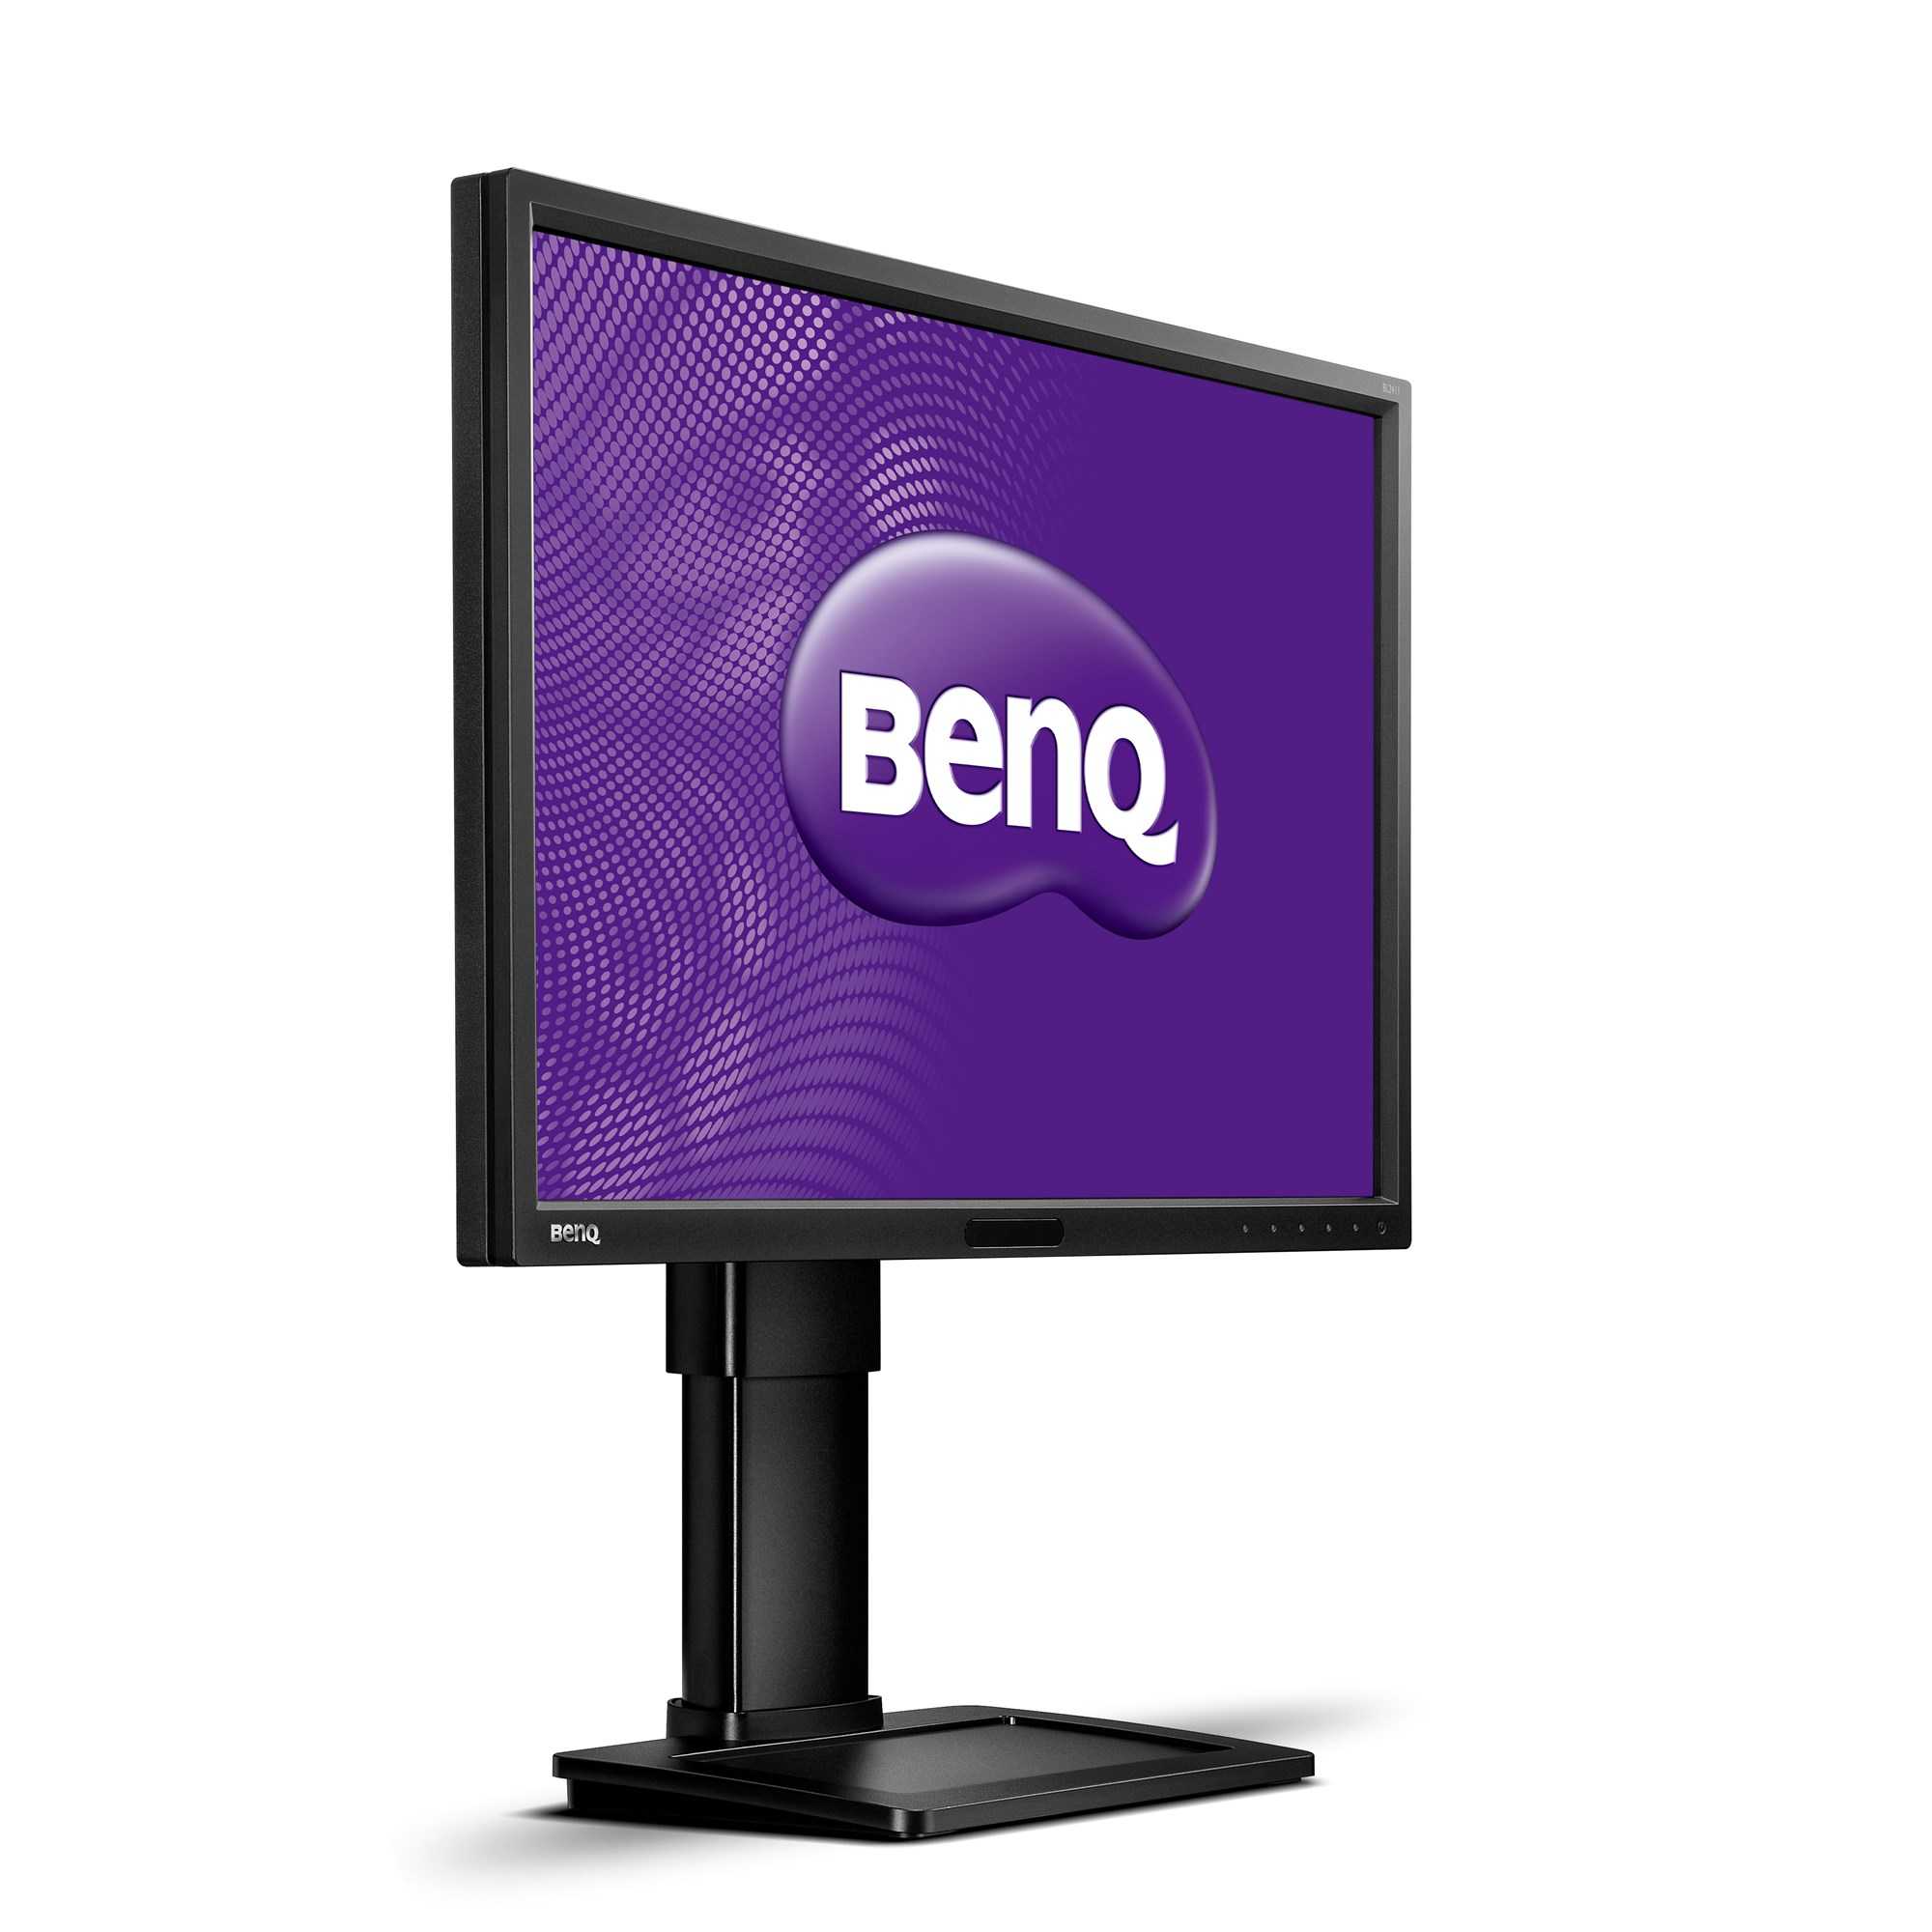 Benq bl2400pt - описание, характеристики, тест, отзывы, цены, фото